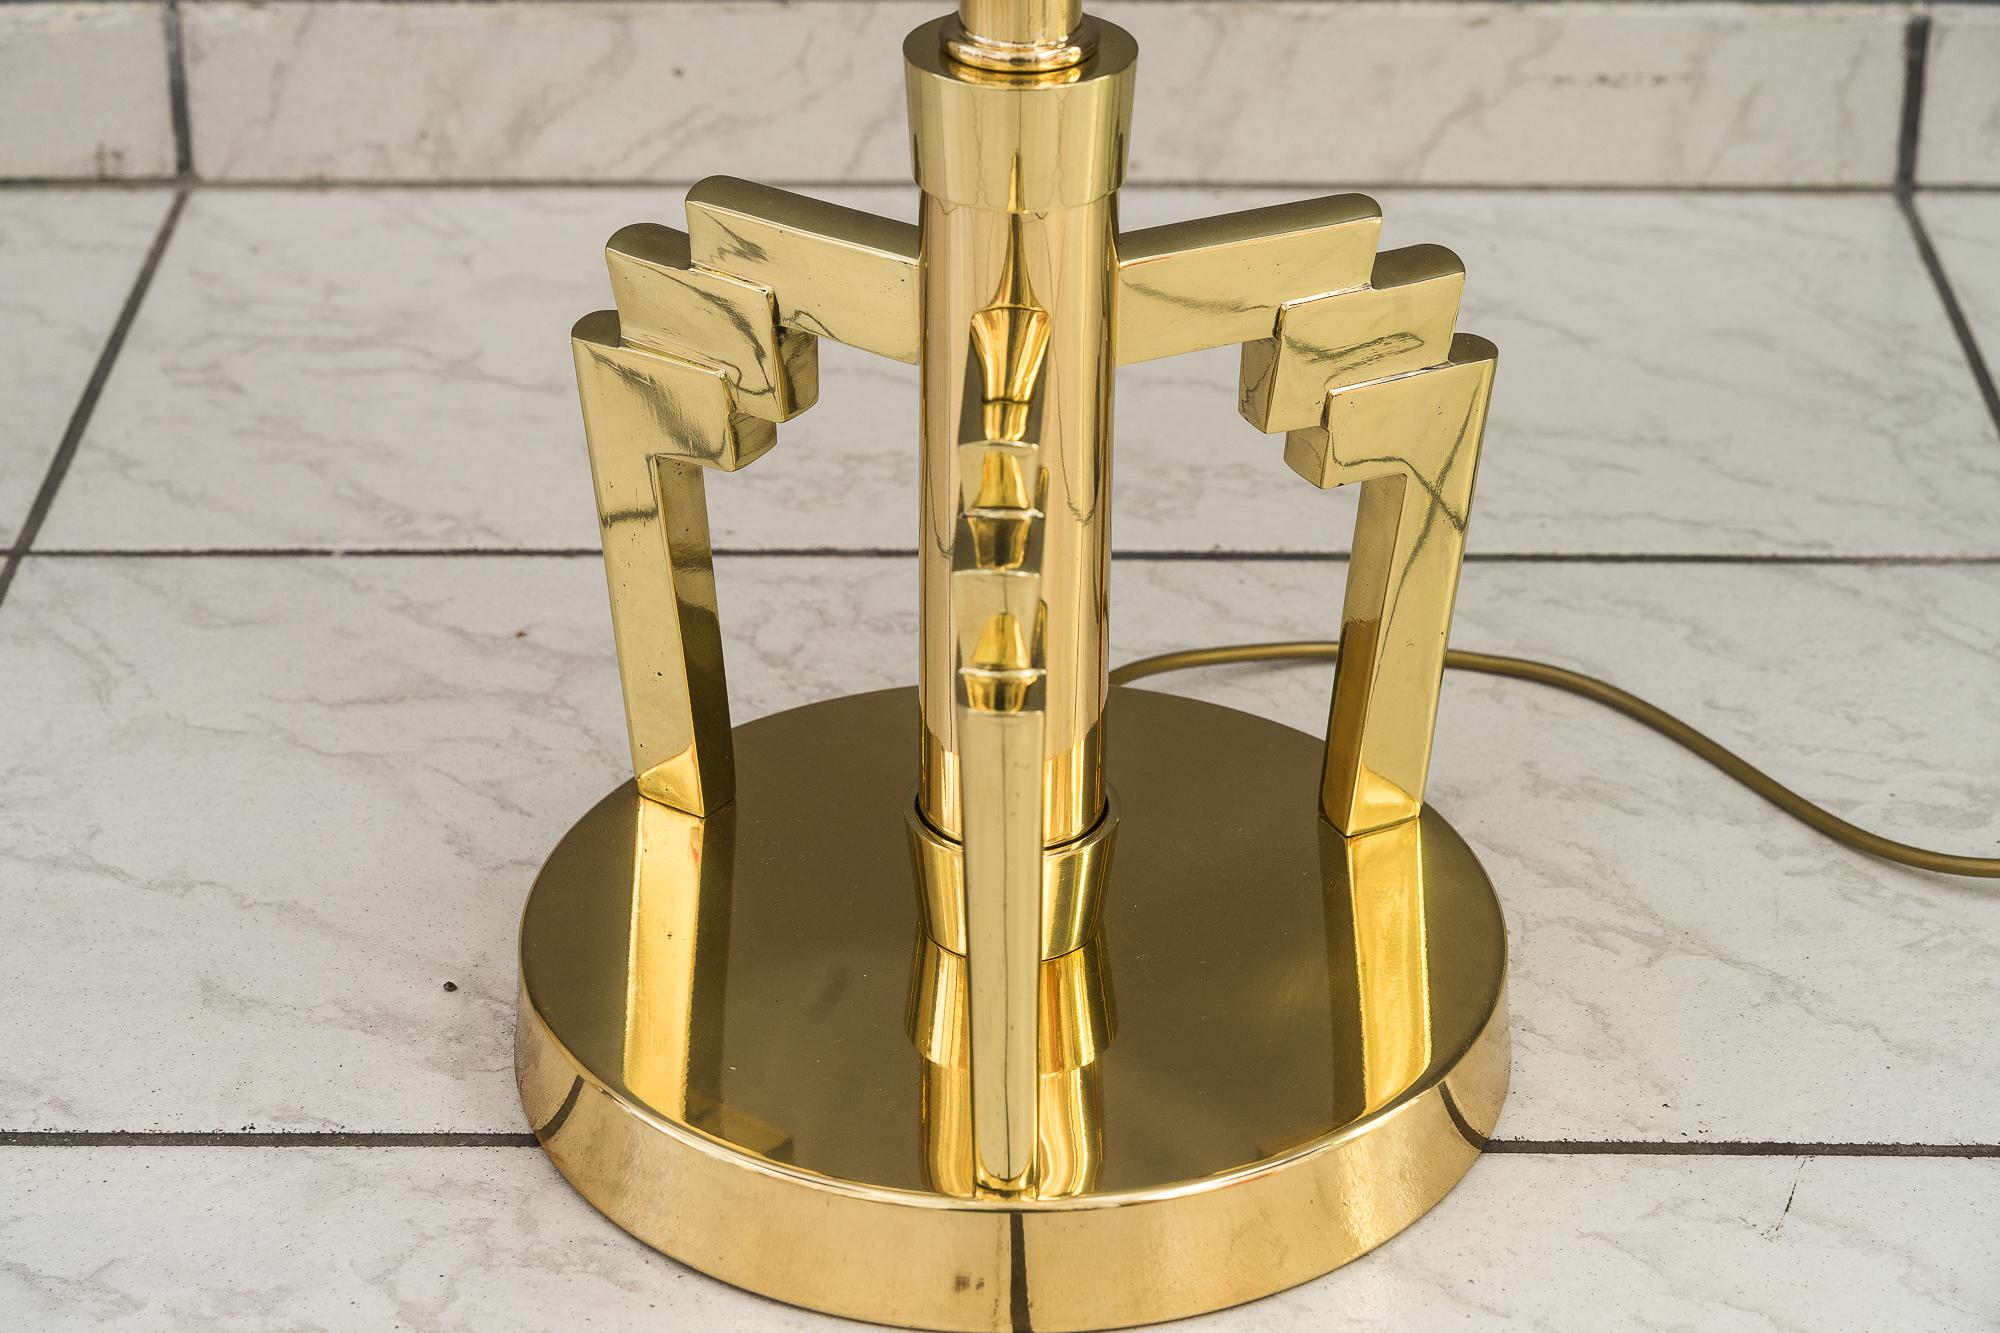 Brass Adjustable Art Deco Floor Lamp with Opaline Glass on Shade, Vienna Around 1920s